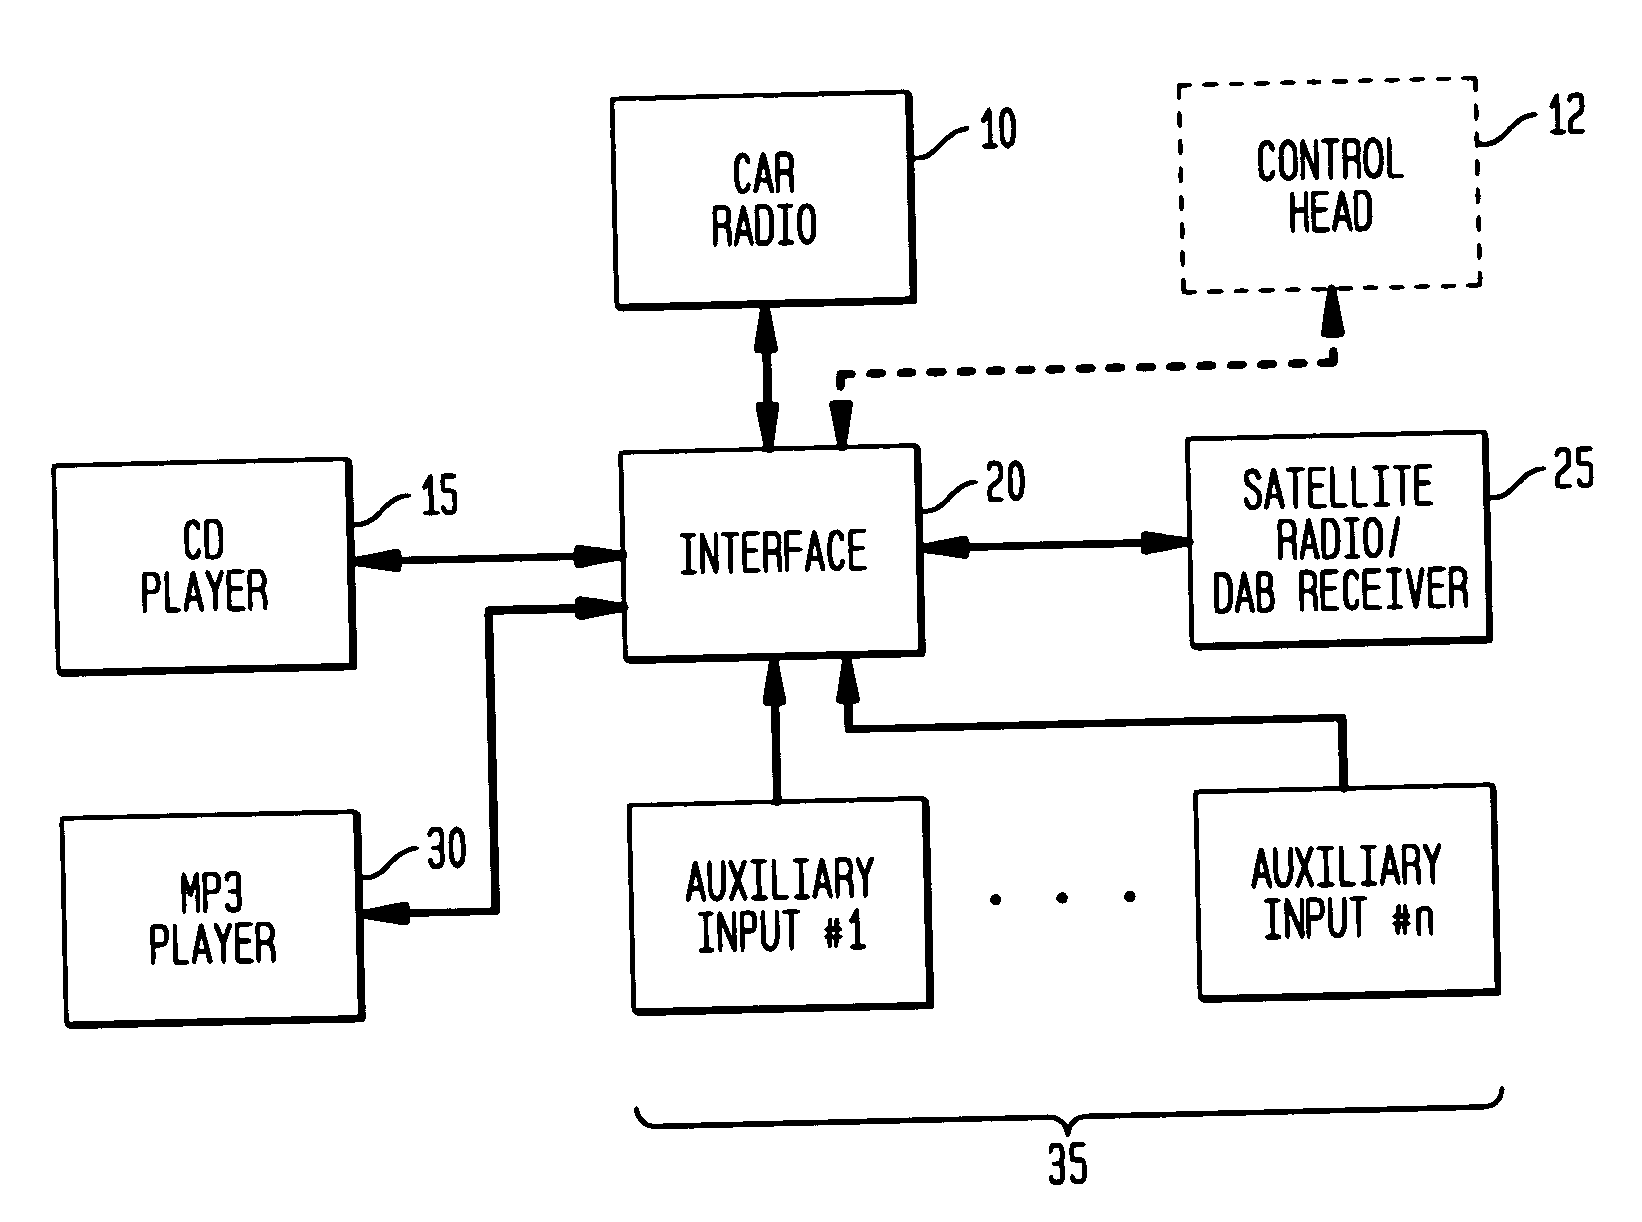 Audio device integration system